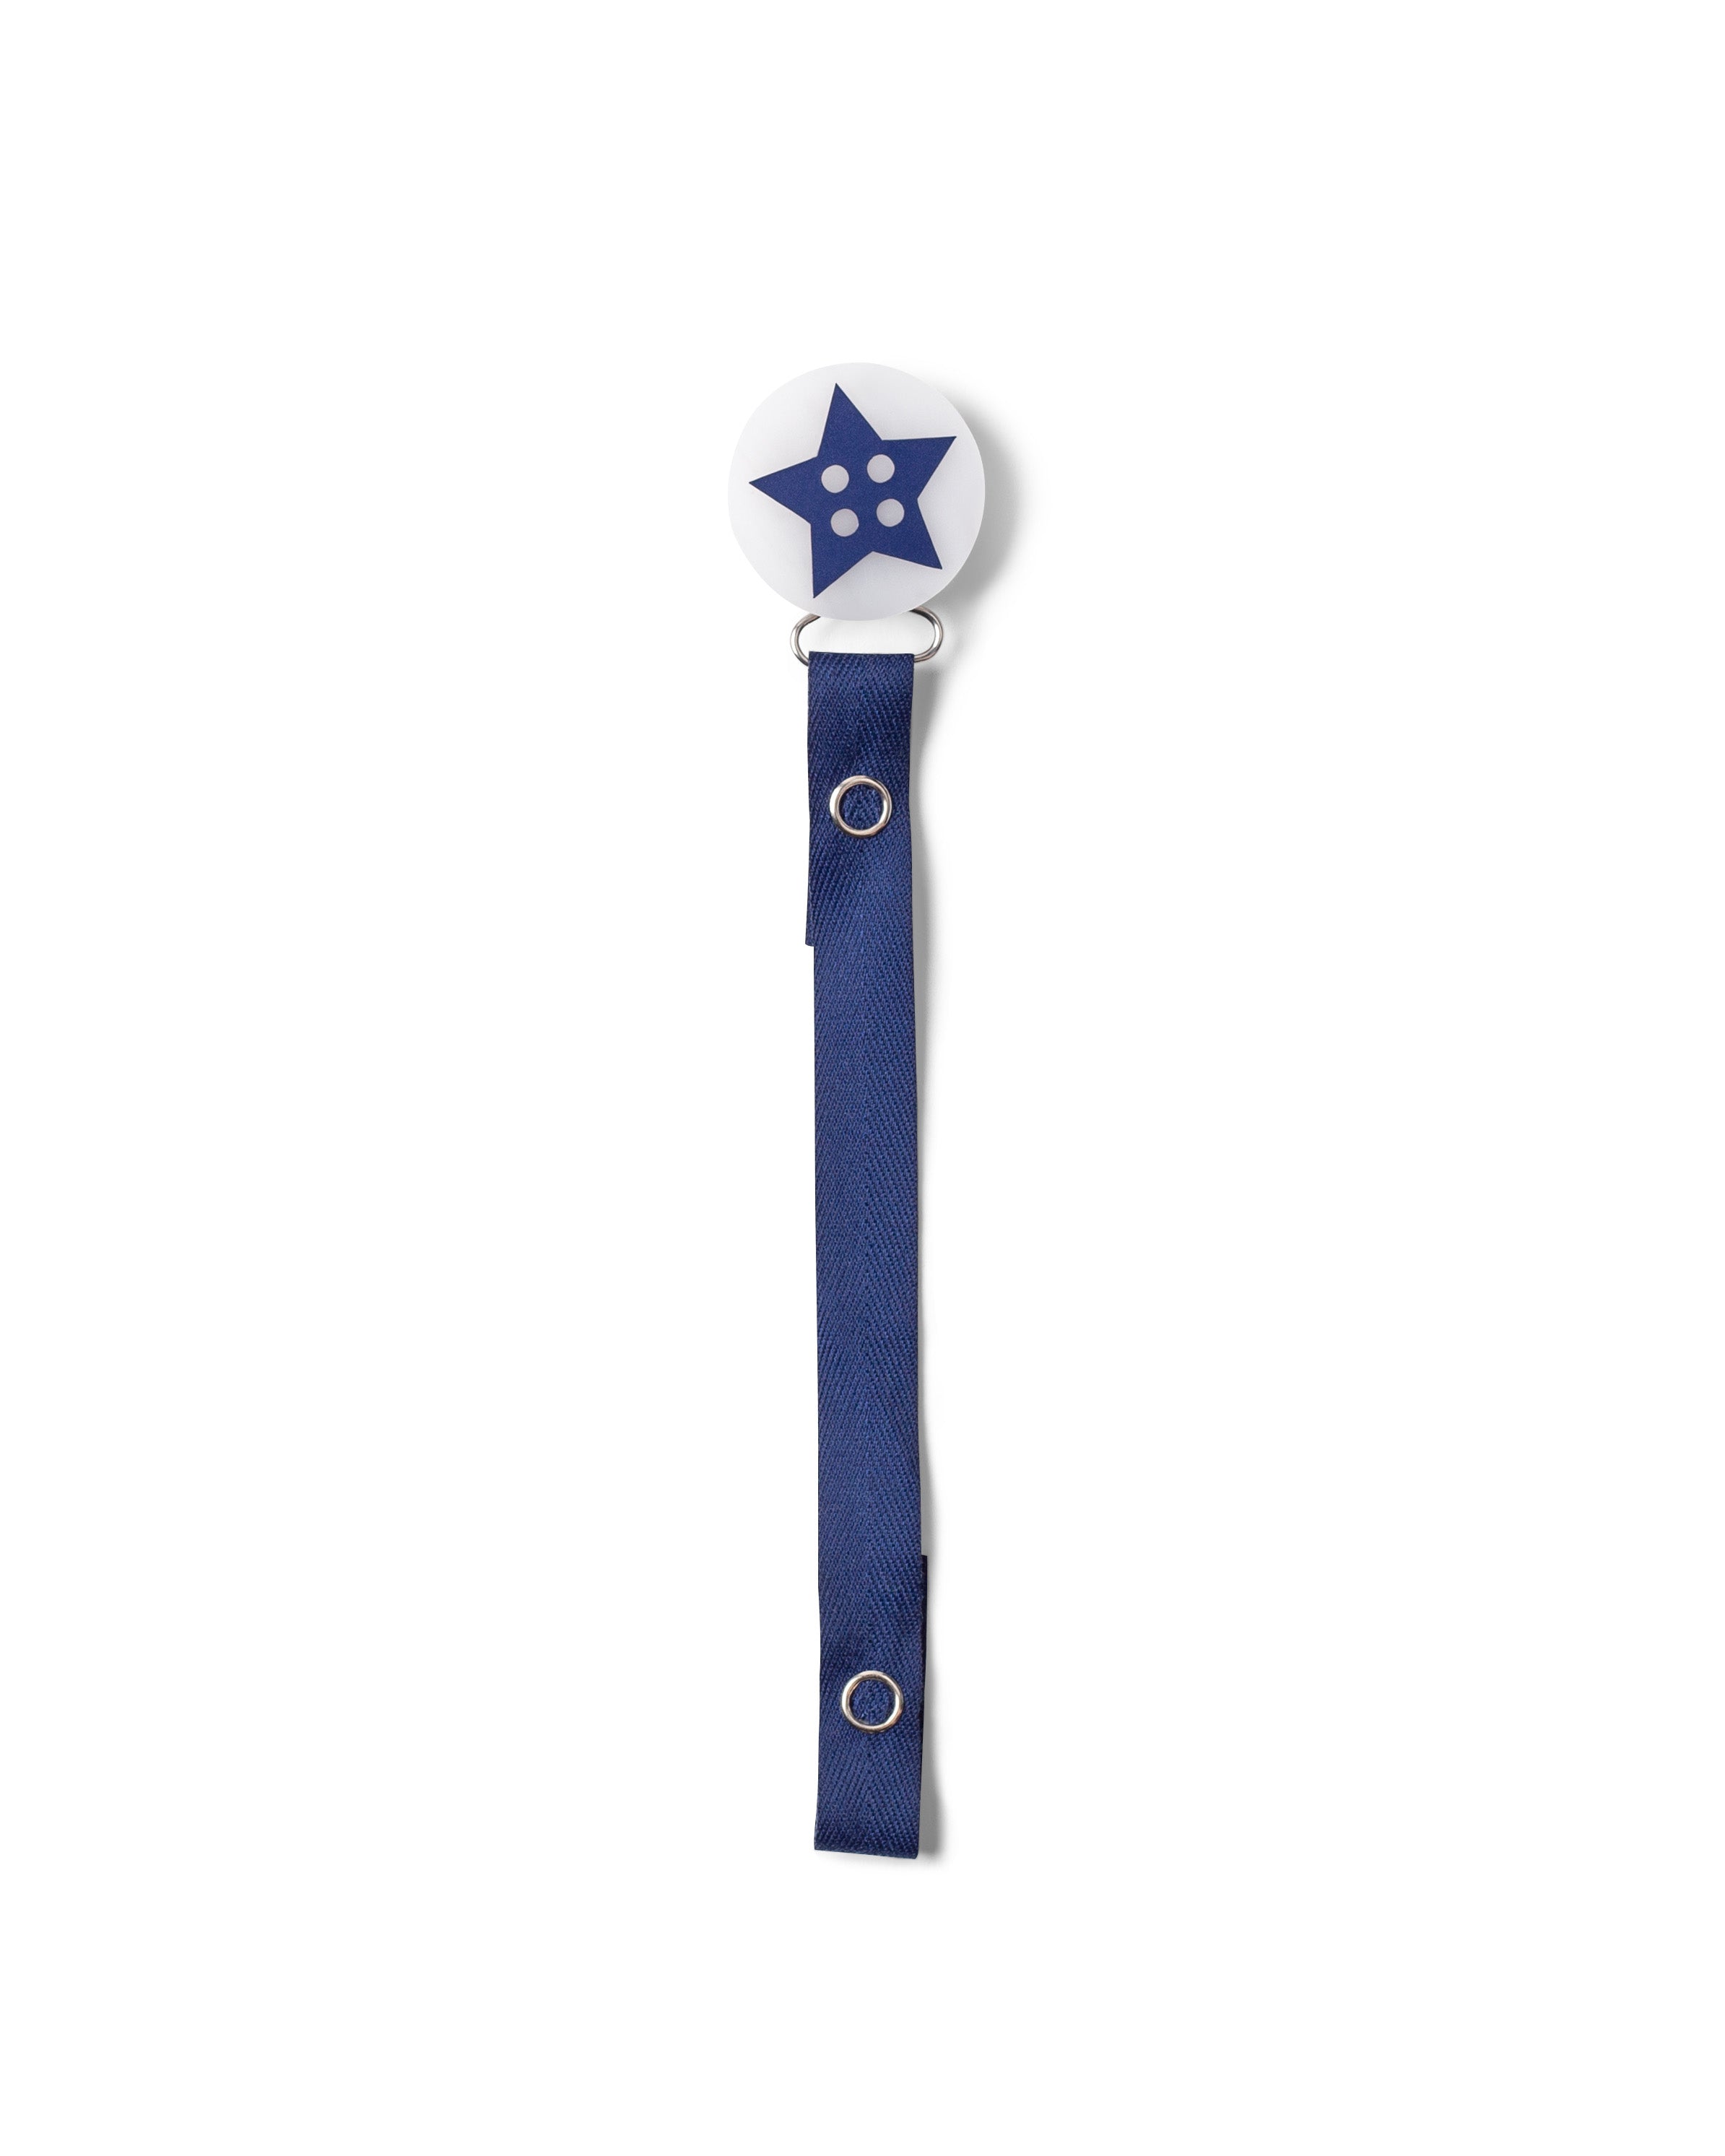 Classy Paci fun "cute as a button" Navy blue star, denim/black for baby toddler girls boys pacifier clip Friggs, Bibs Gift Set